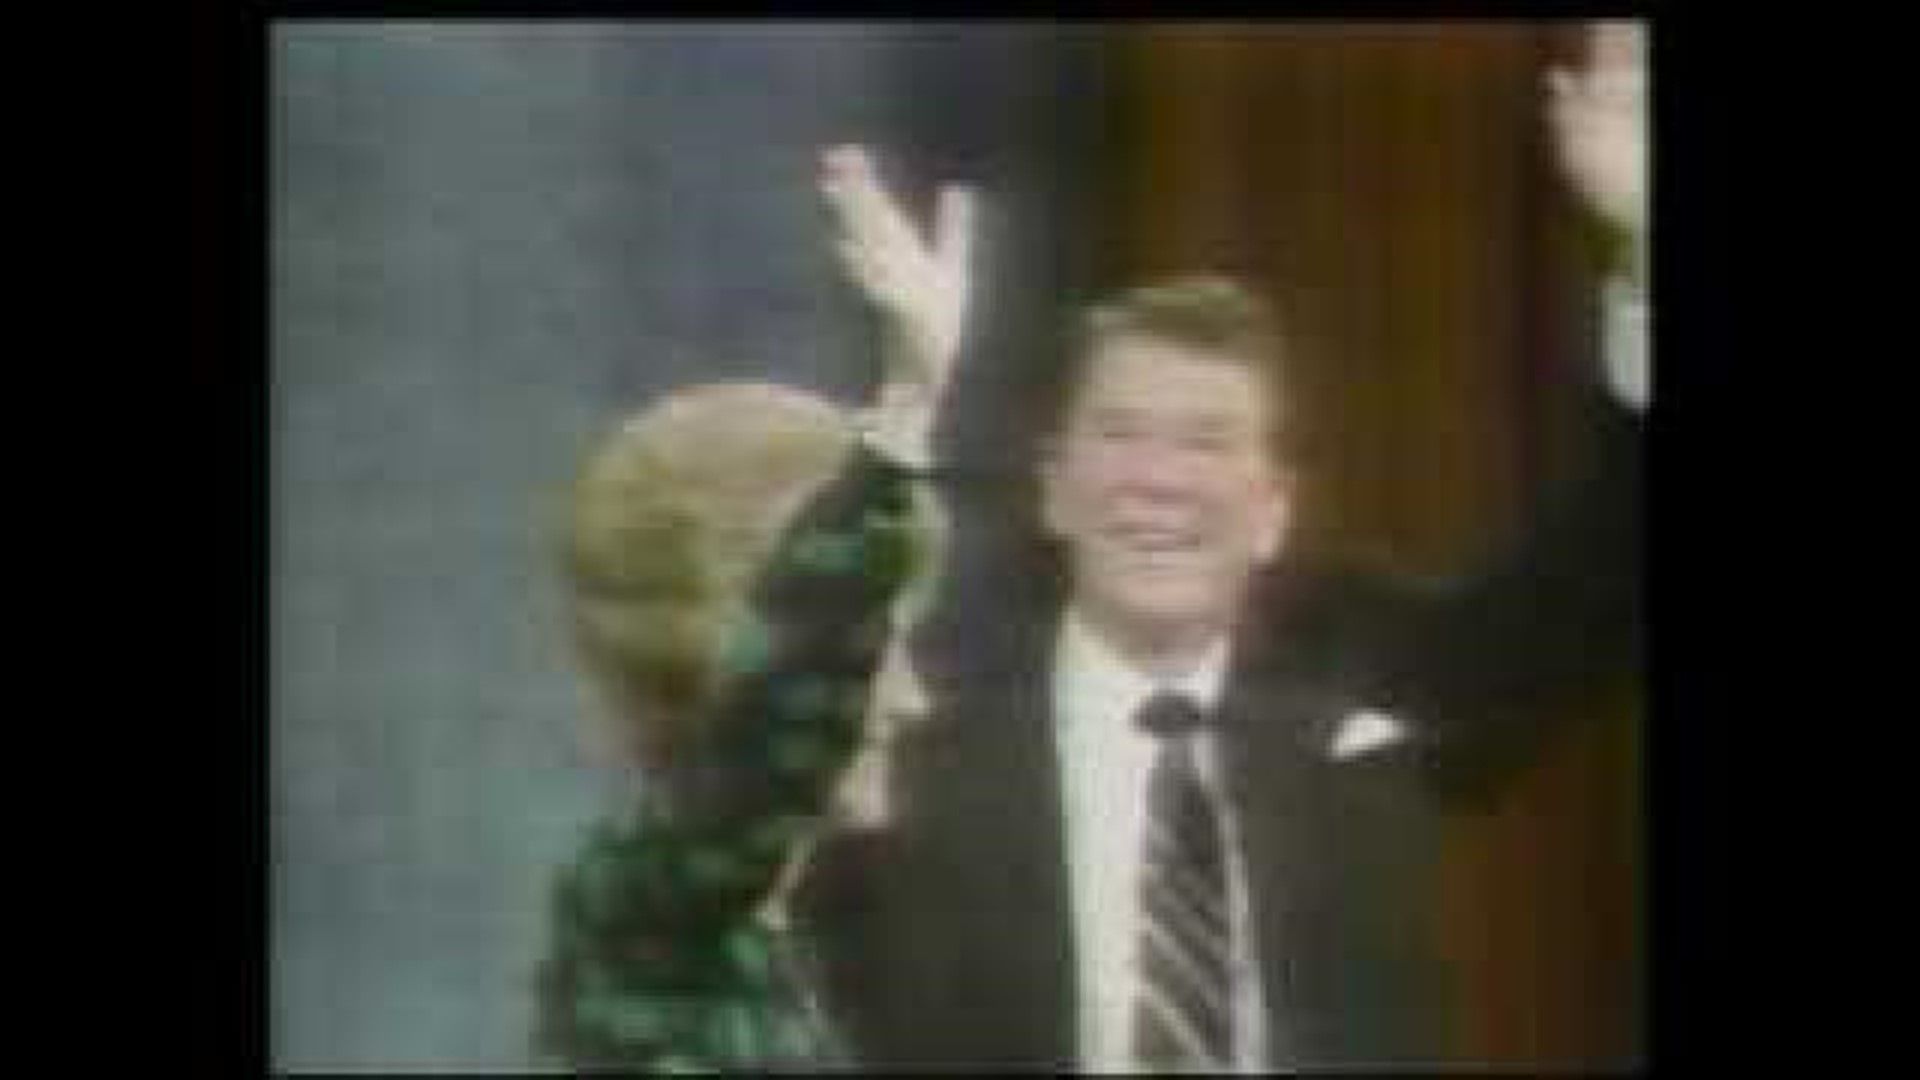 Reagan pursues political career